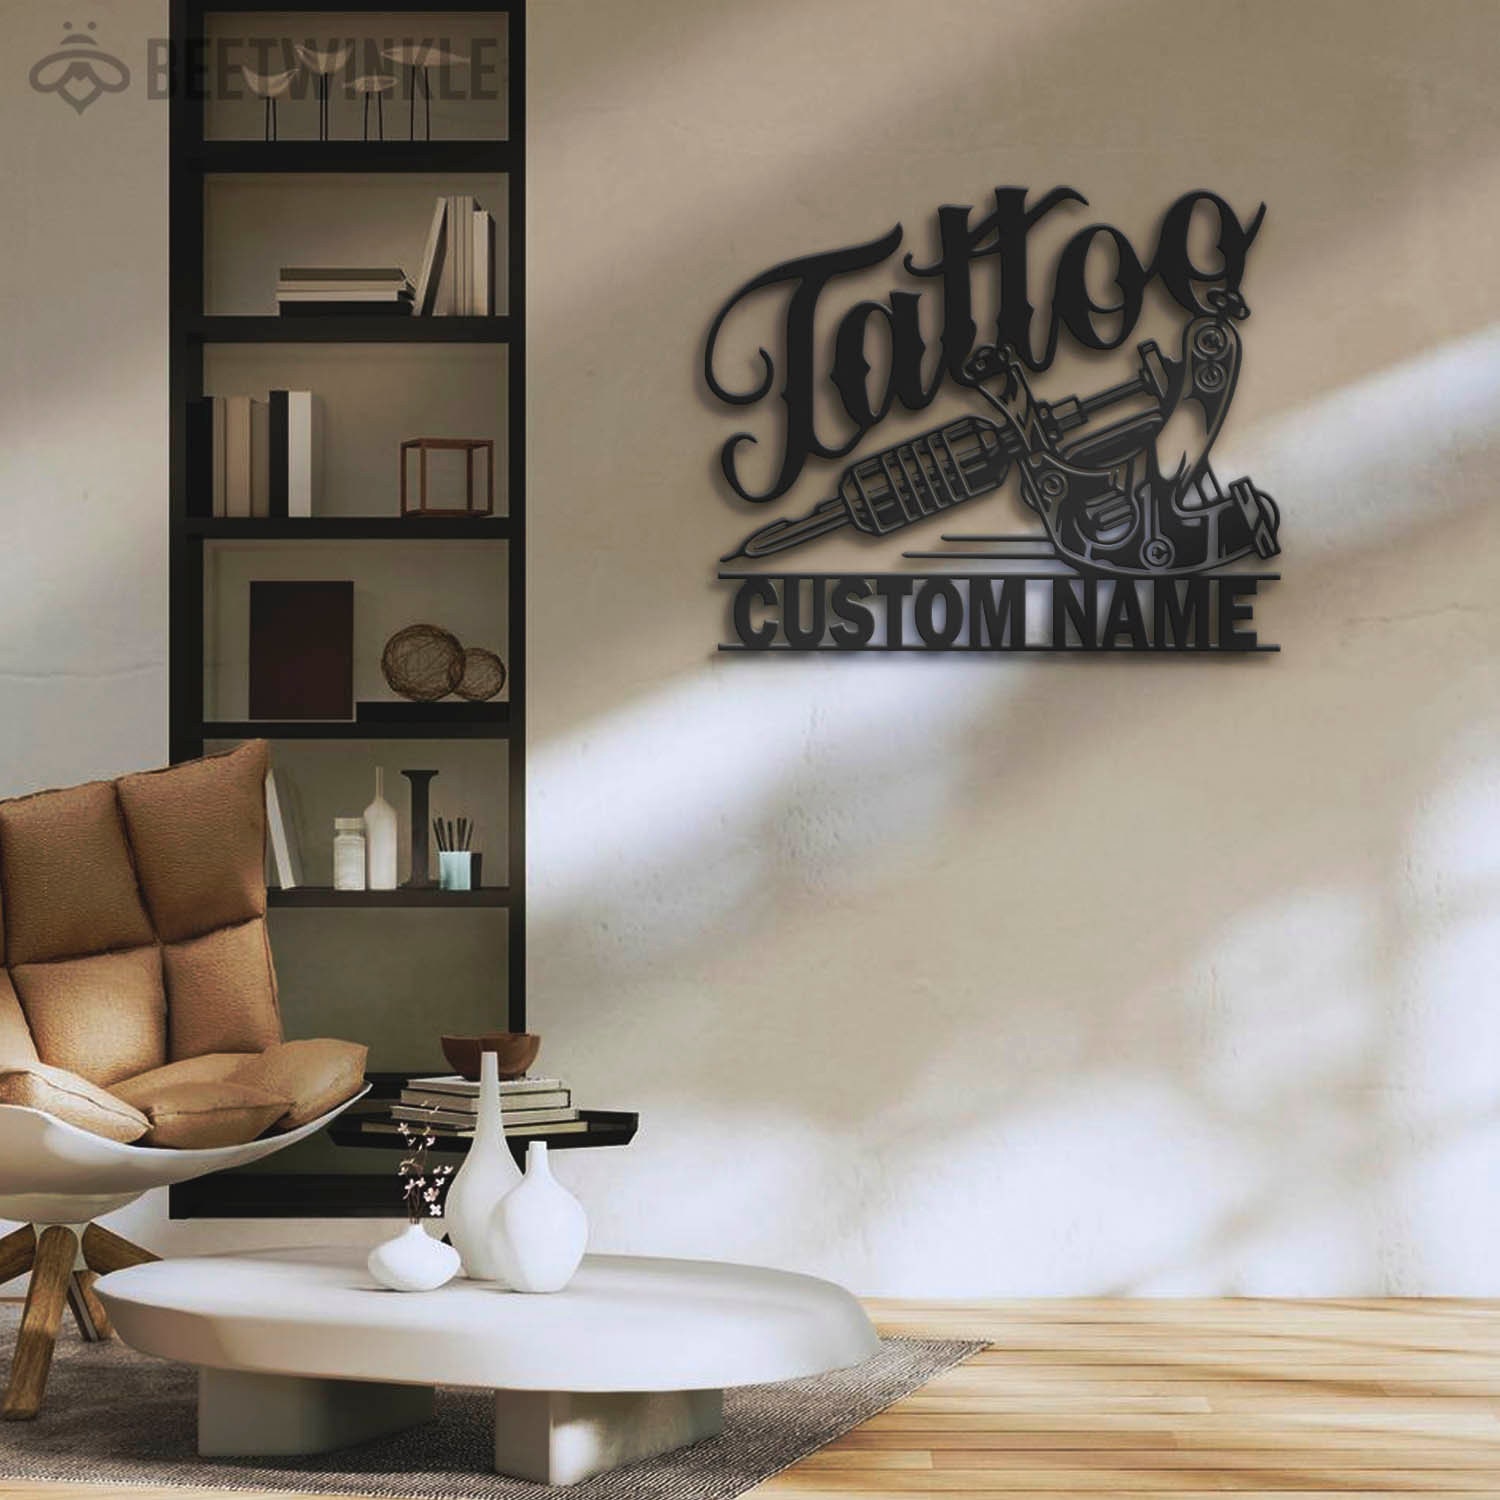 Tattoo Machine Sign Personalized Metal Signs for Tattoo Studio Decor Tattoo  Artist Gifts - Custom Laser Cut Metal Art & Signs, Gift & Home Decor